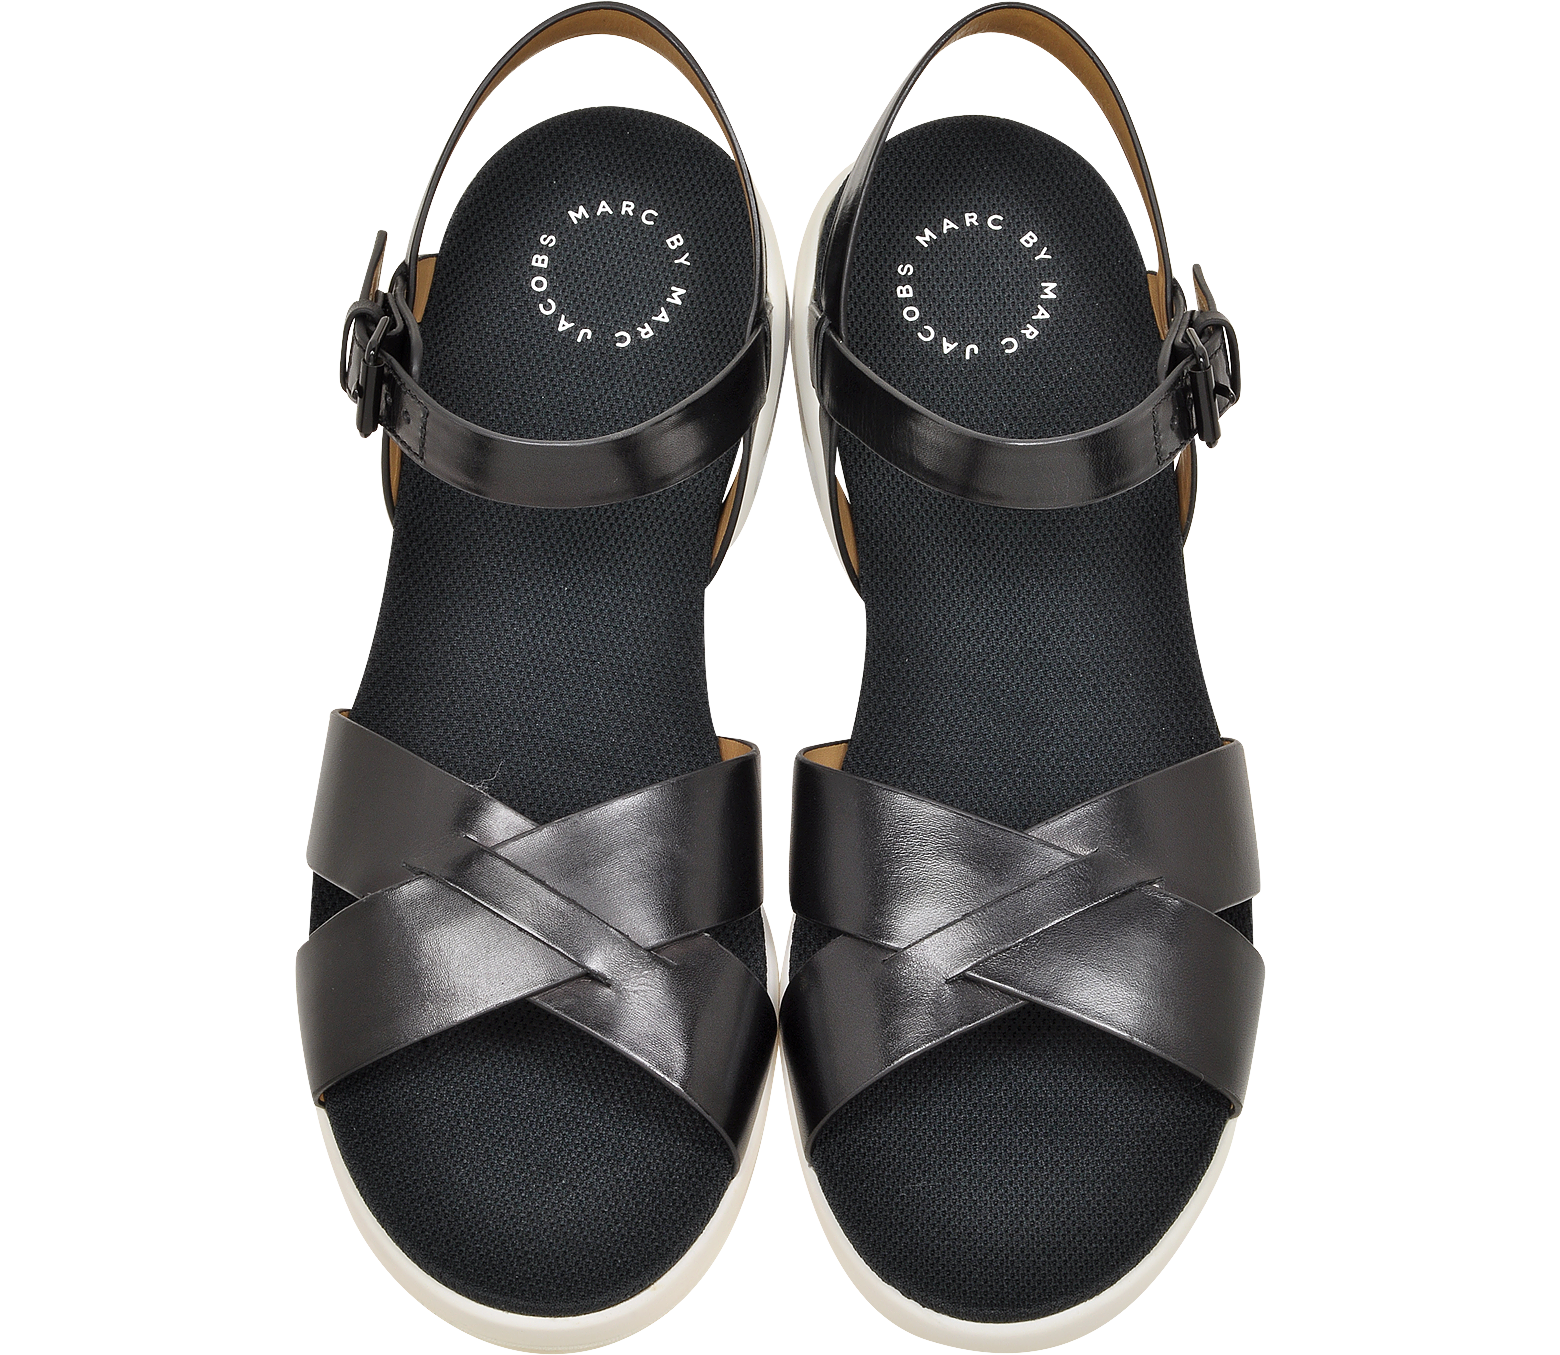 Marc by Marc Jacobs Teck Vacchetta Black Leather Sandal Flat 36 IT/EU ...